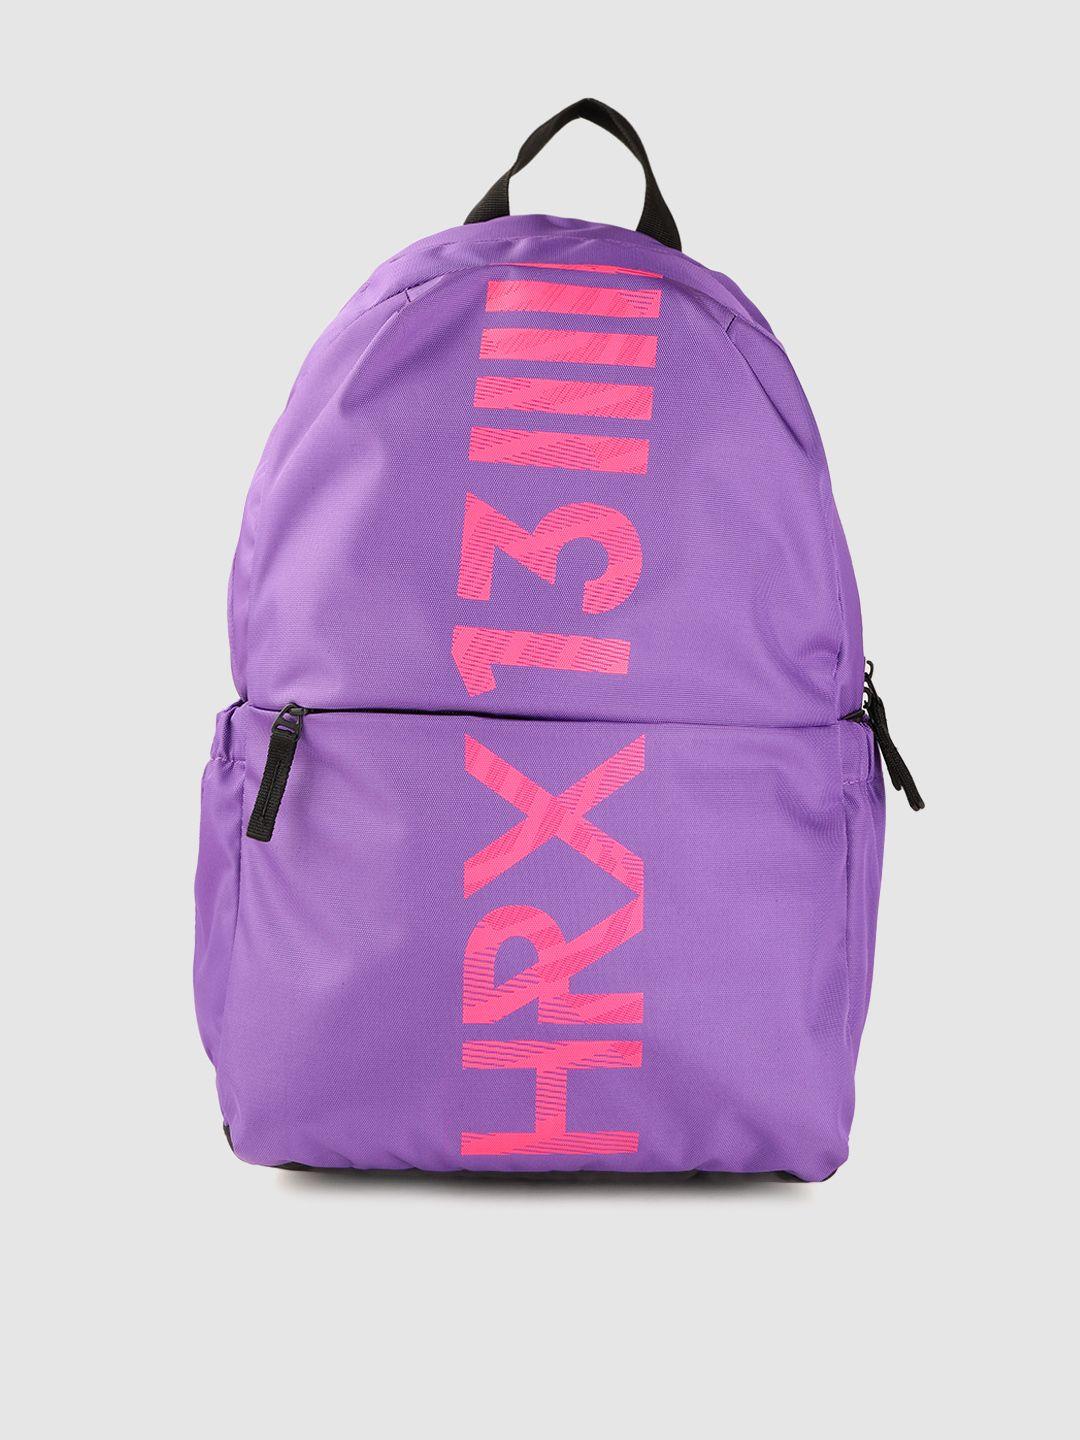 hrx by hrithik roshan unisex purple & pink brand logo print 15 inch laptop backpack